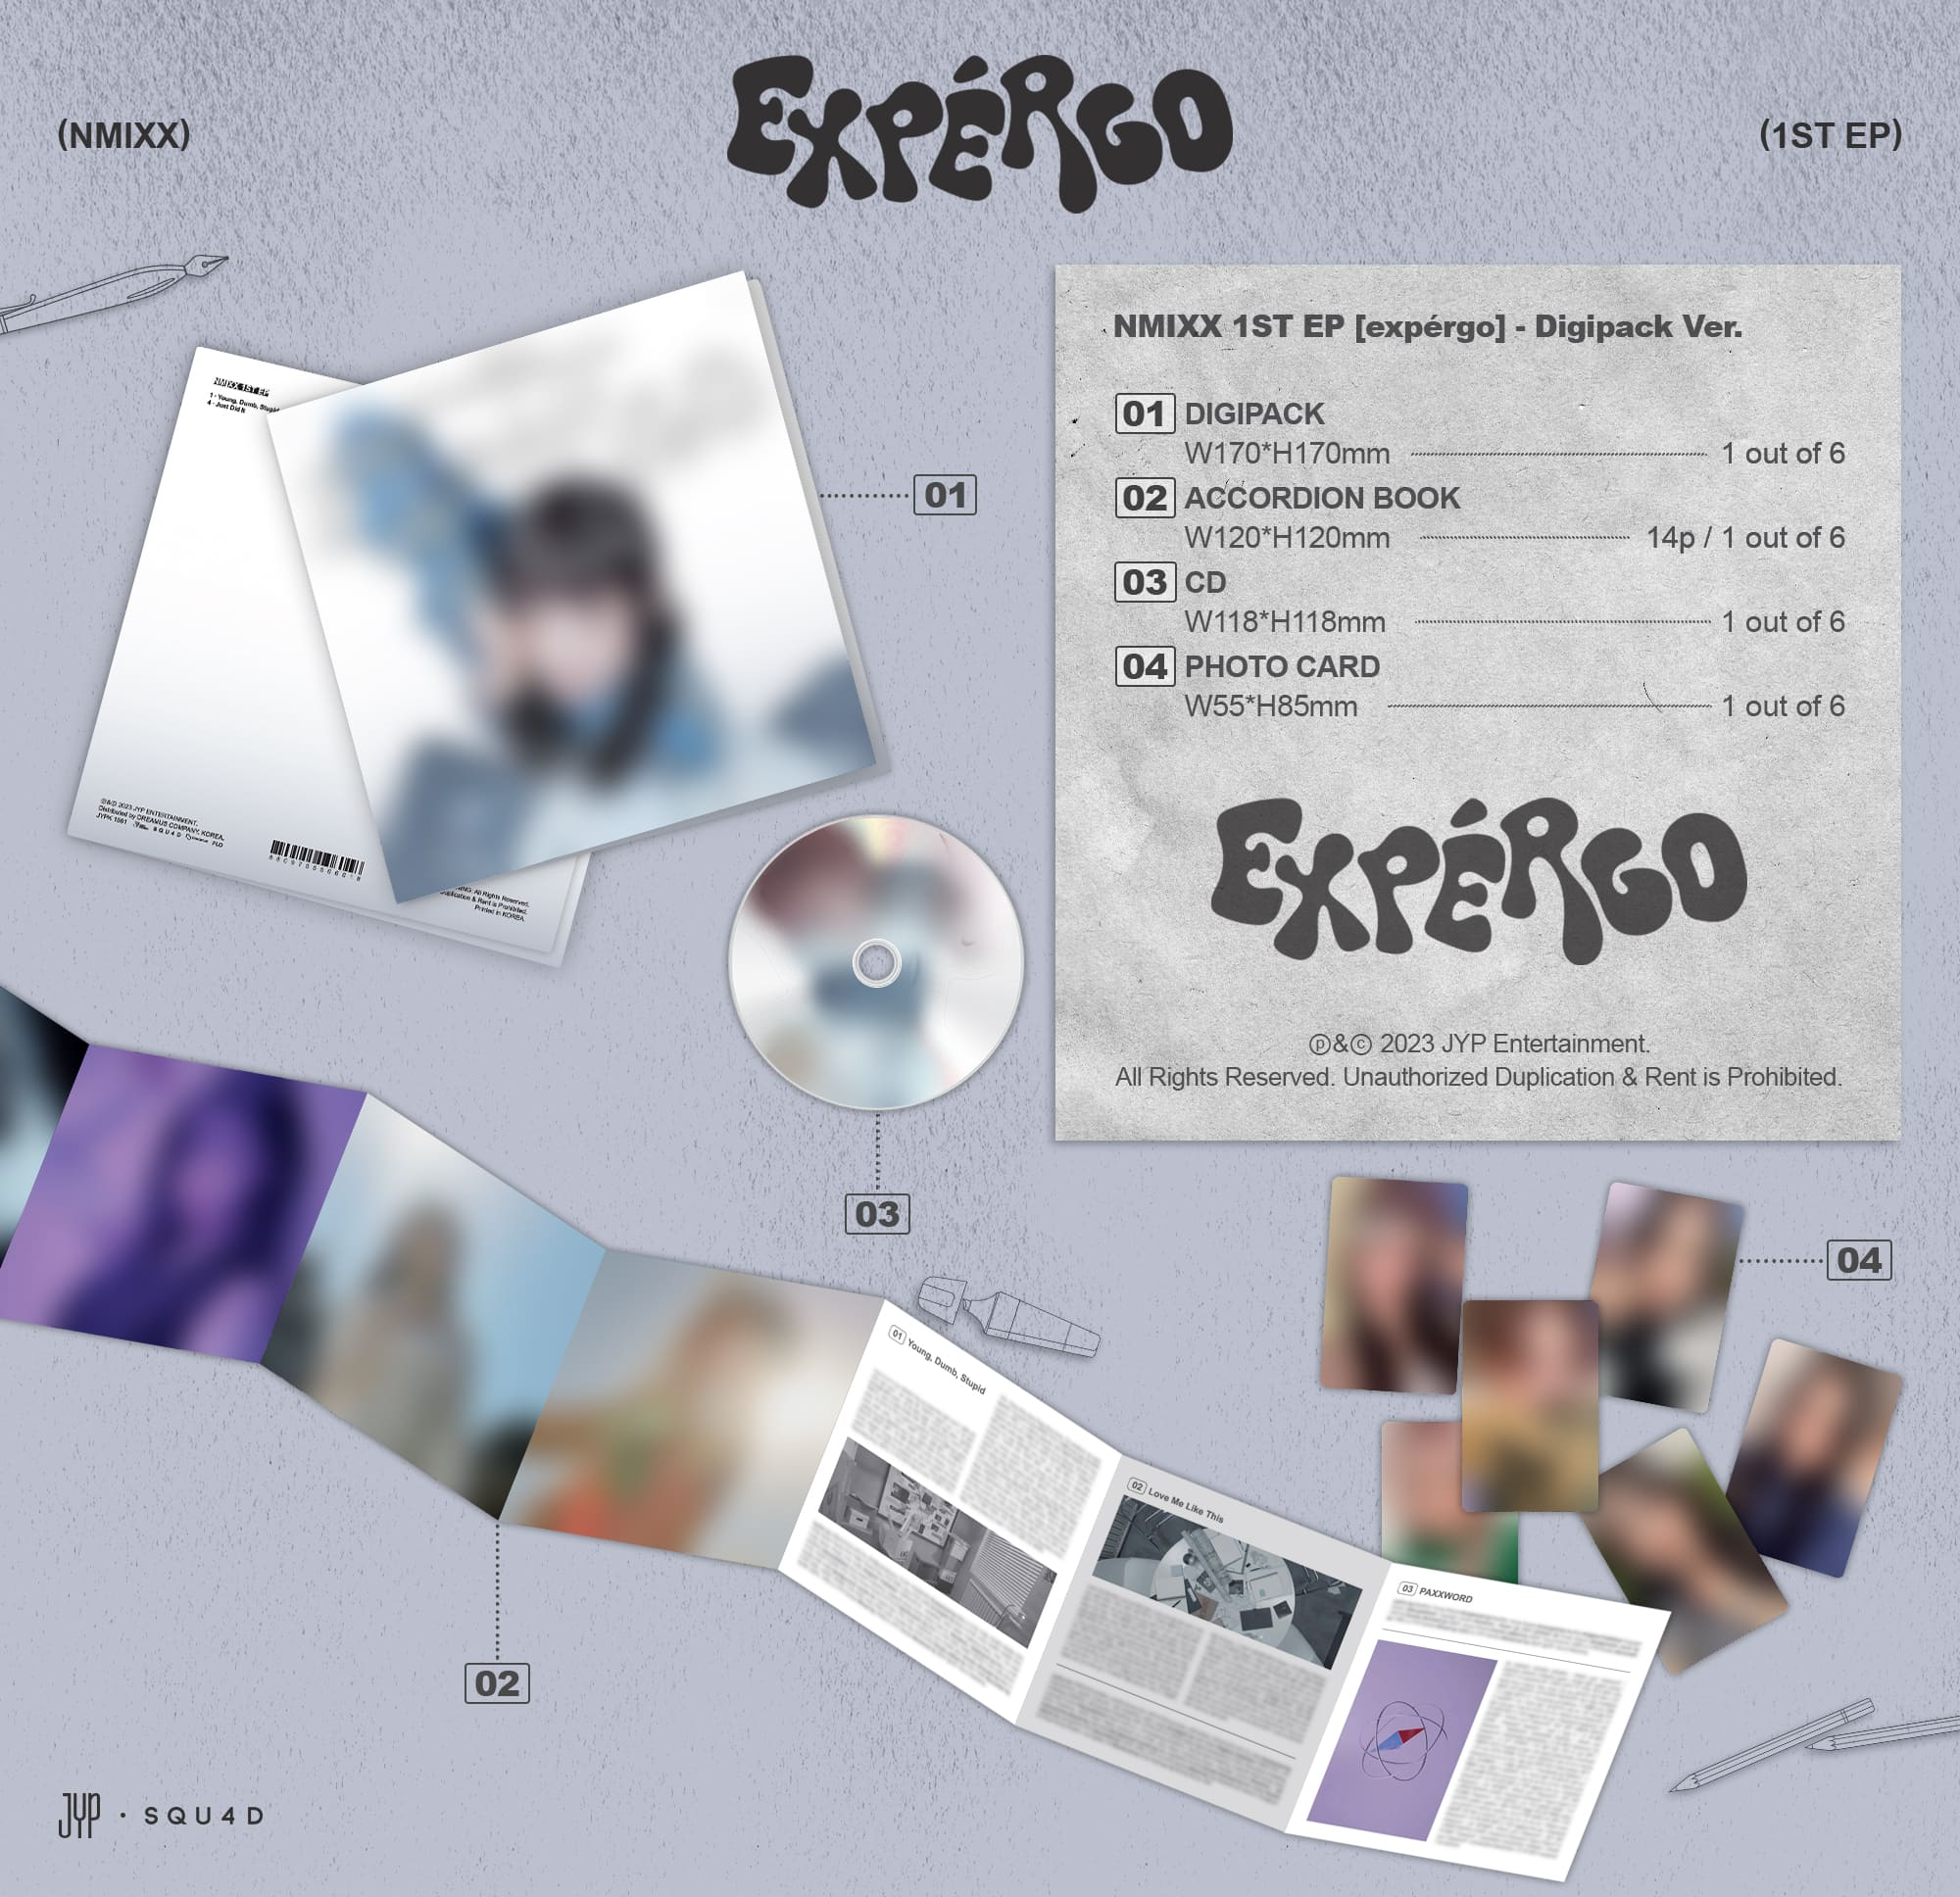 NMIXX 1st EP expérgo (Digipack Version)